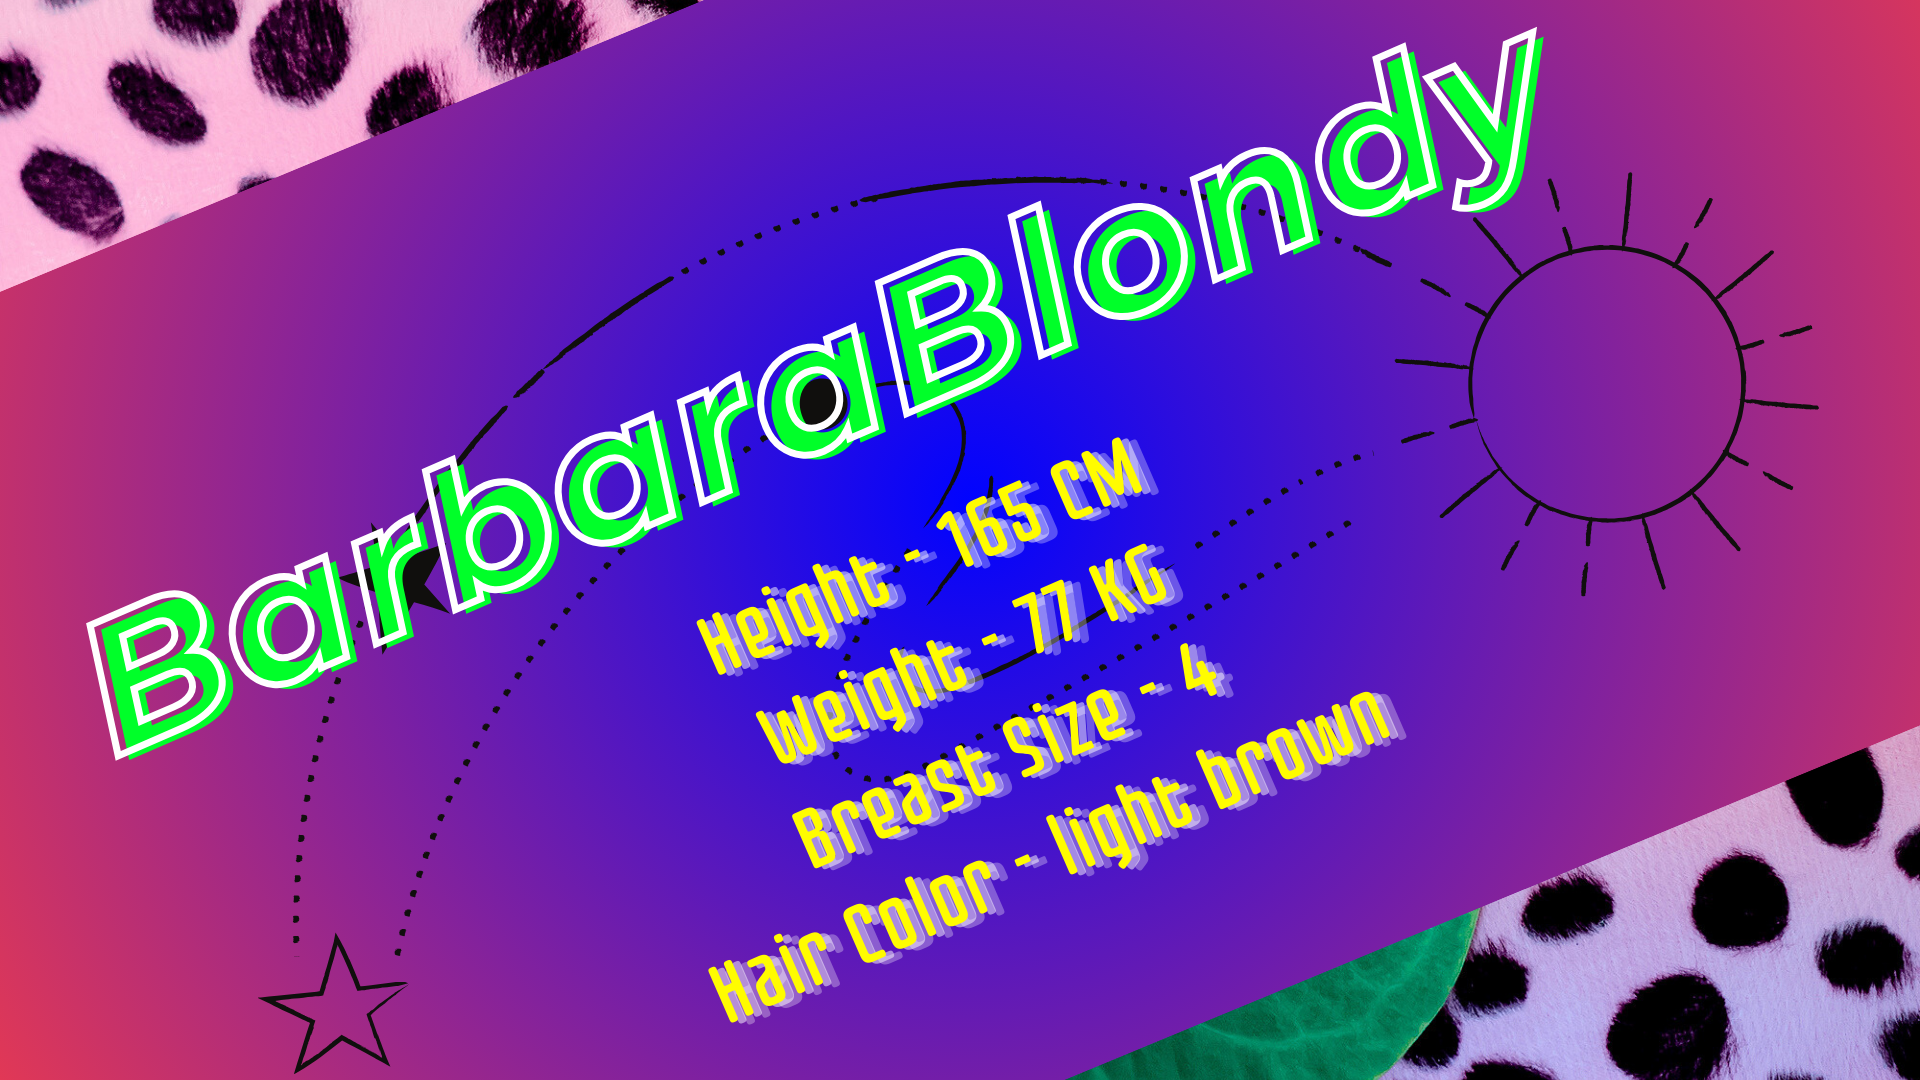 BarbaraBlondy 1 image: 1